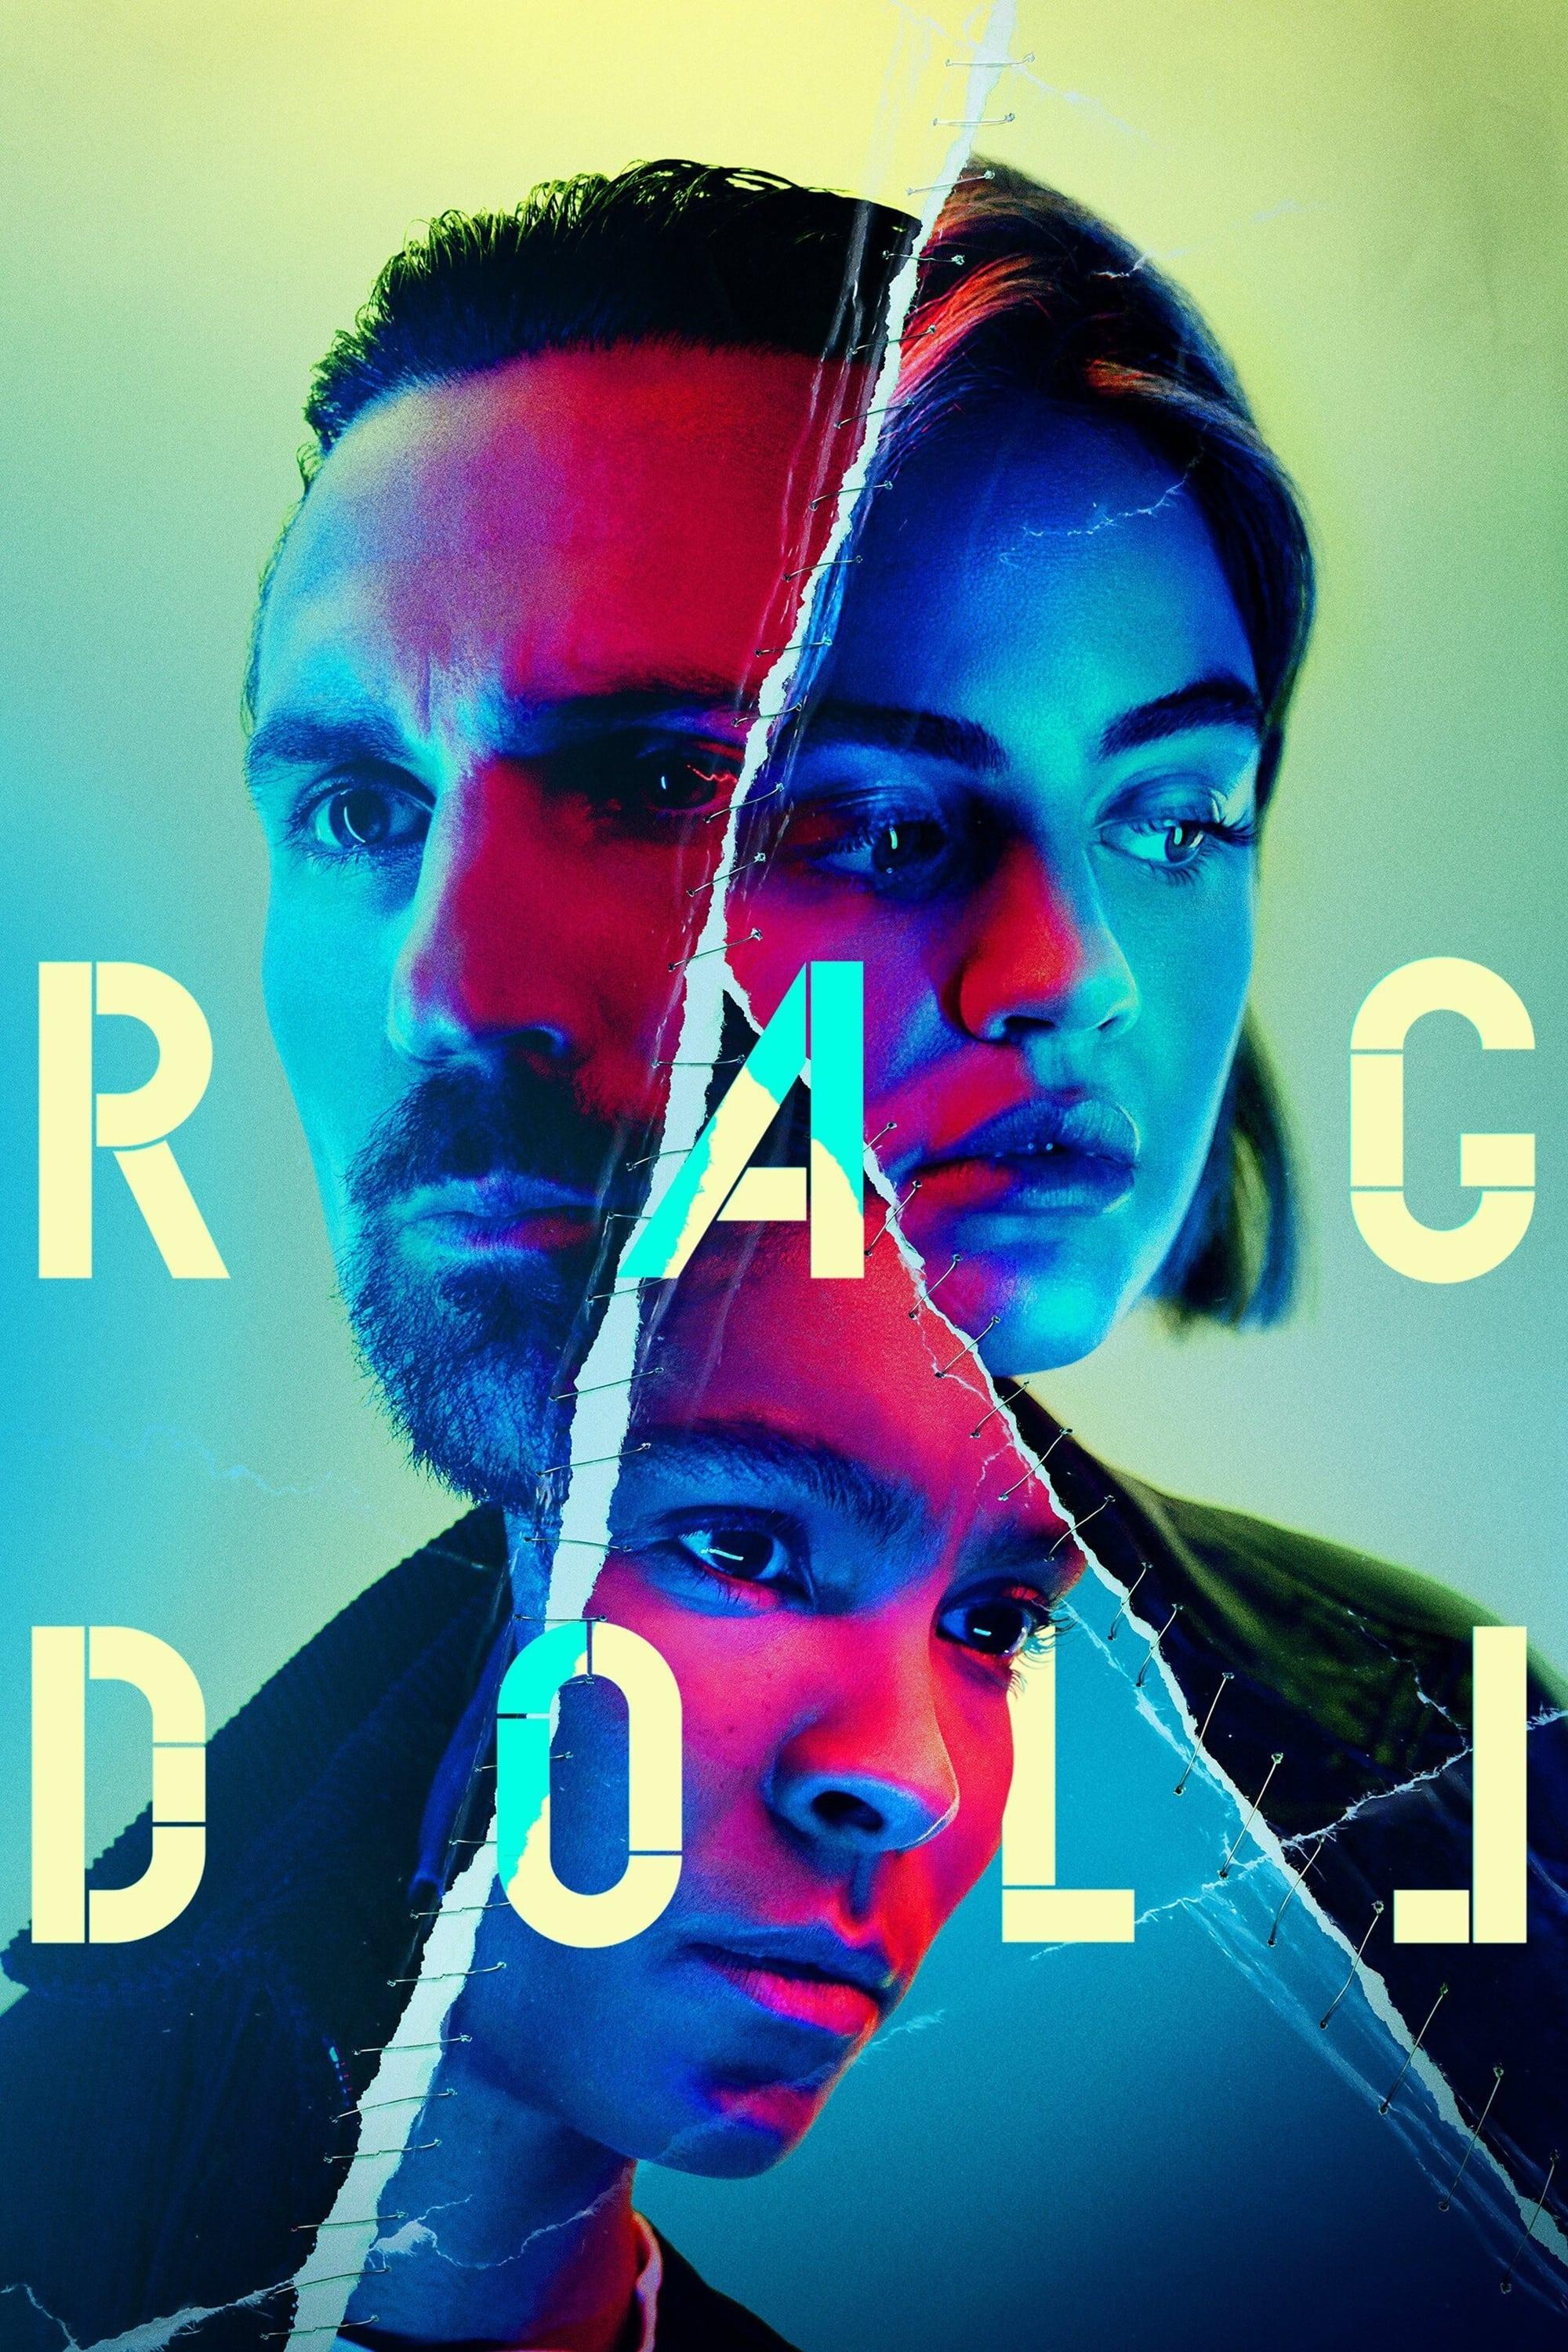 Ragdoll poster